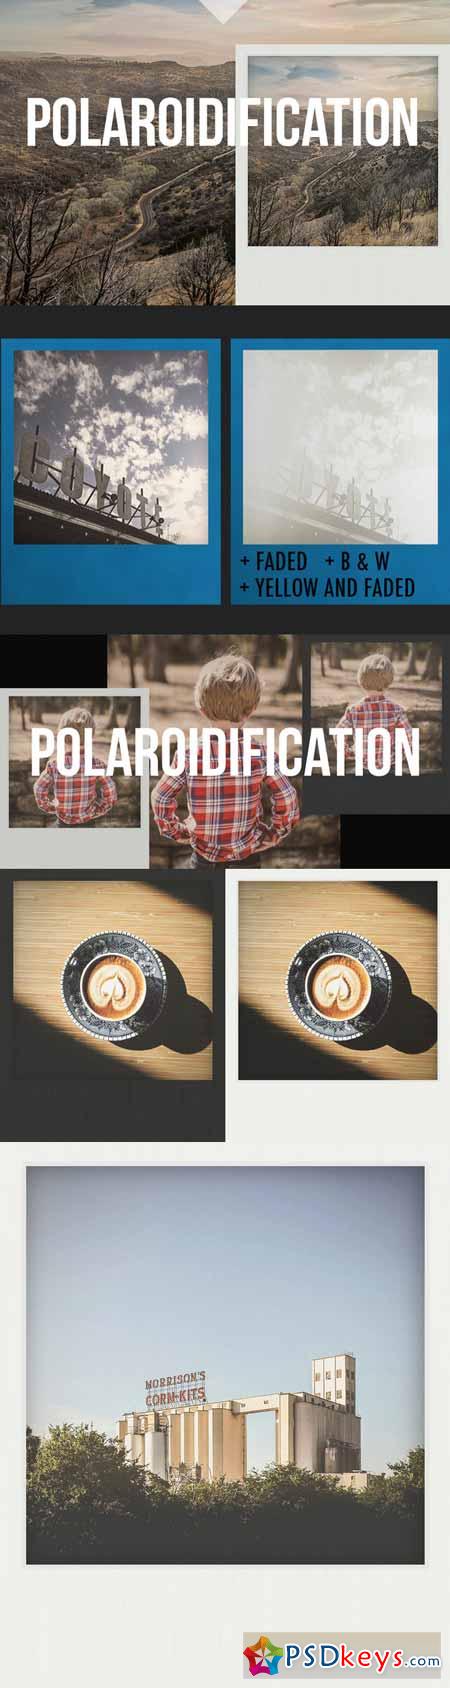 Polaroidification Photoshop Action 92897